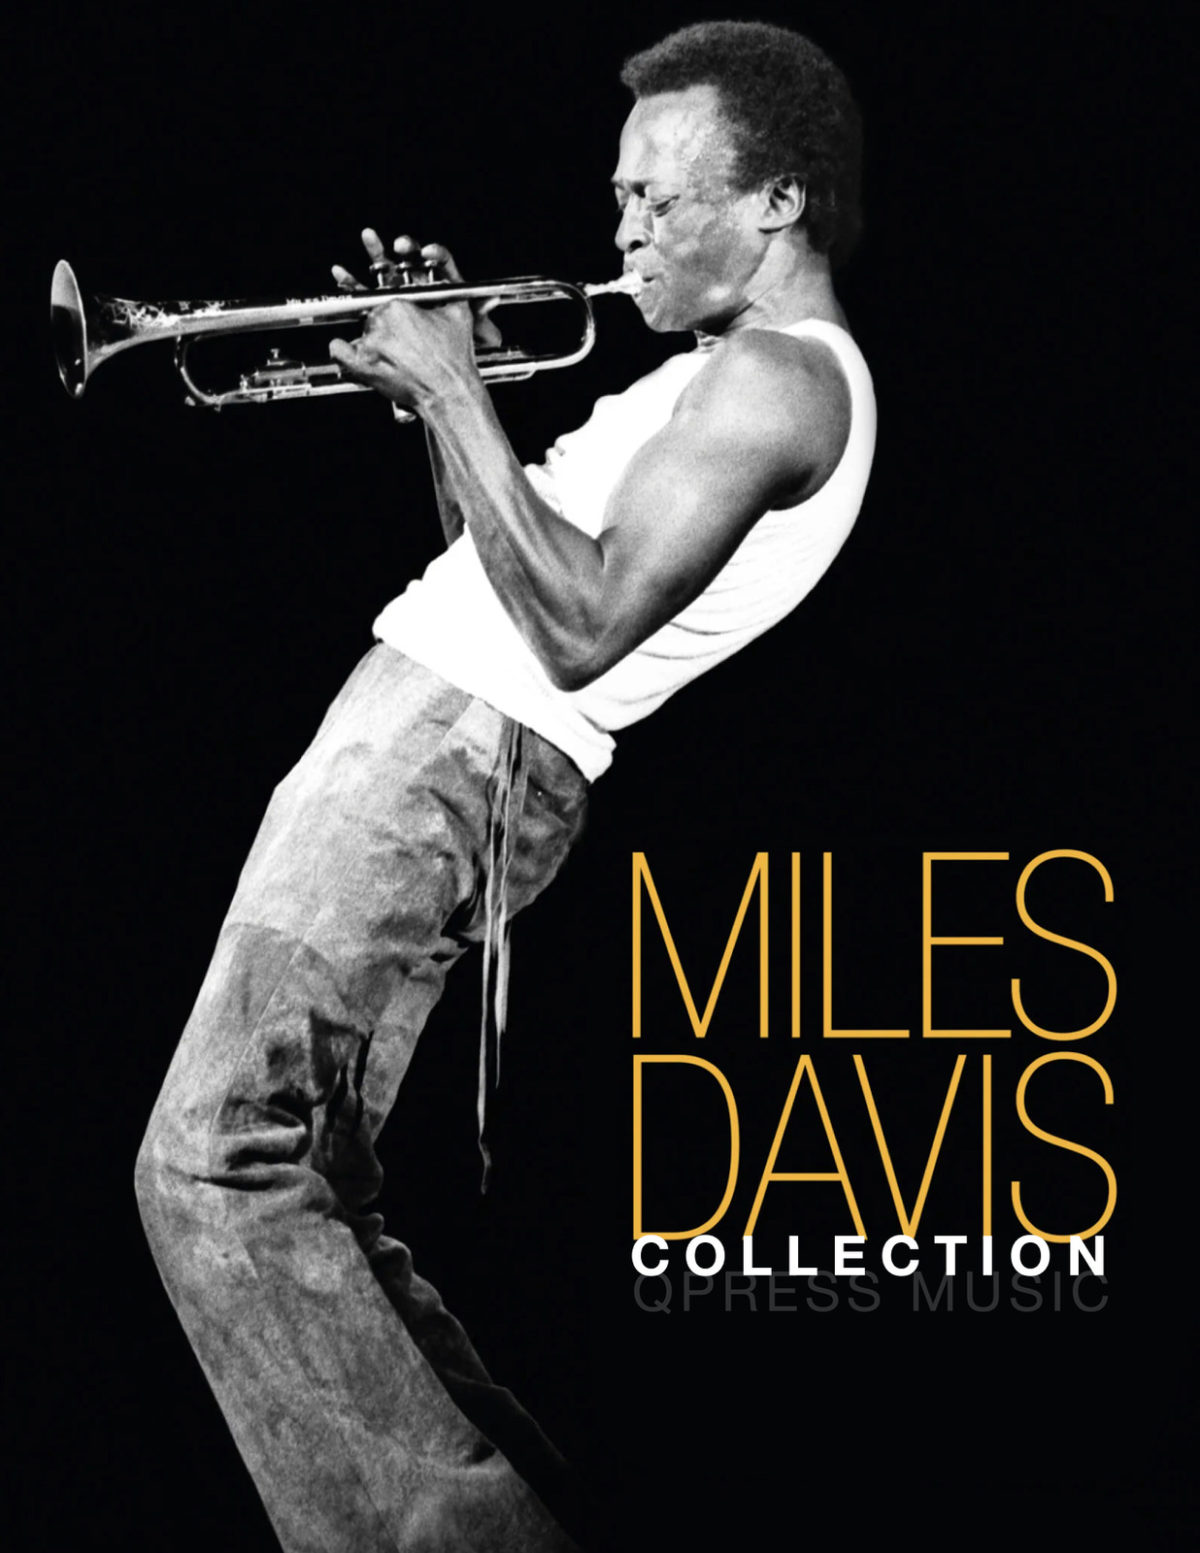 Complete Miles Davis